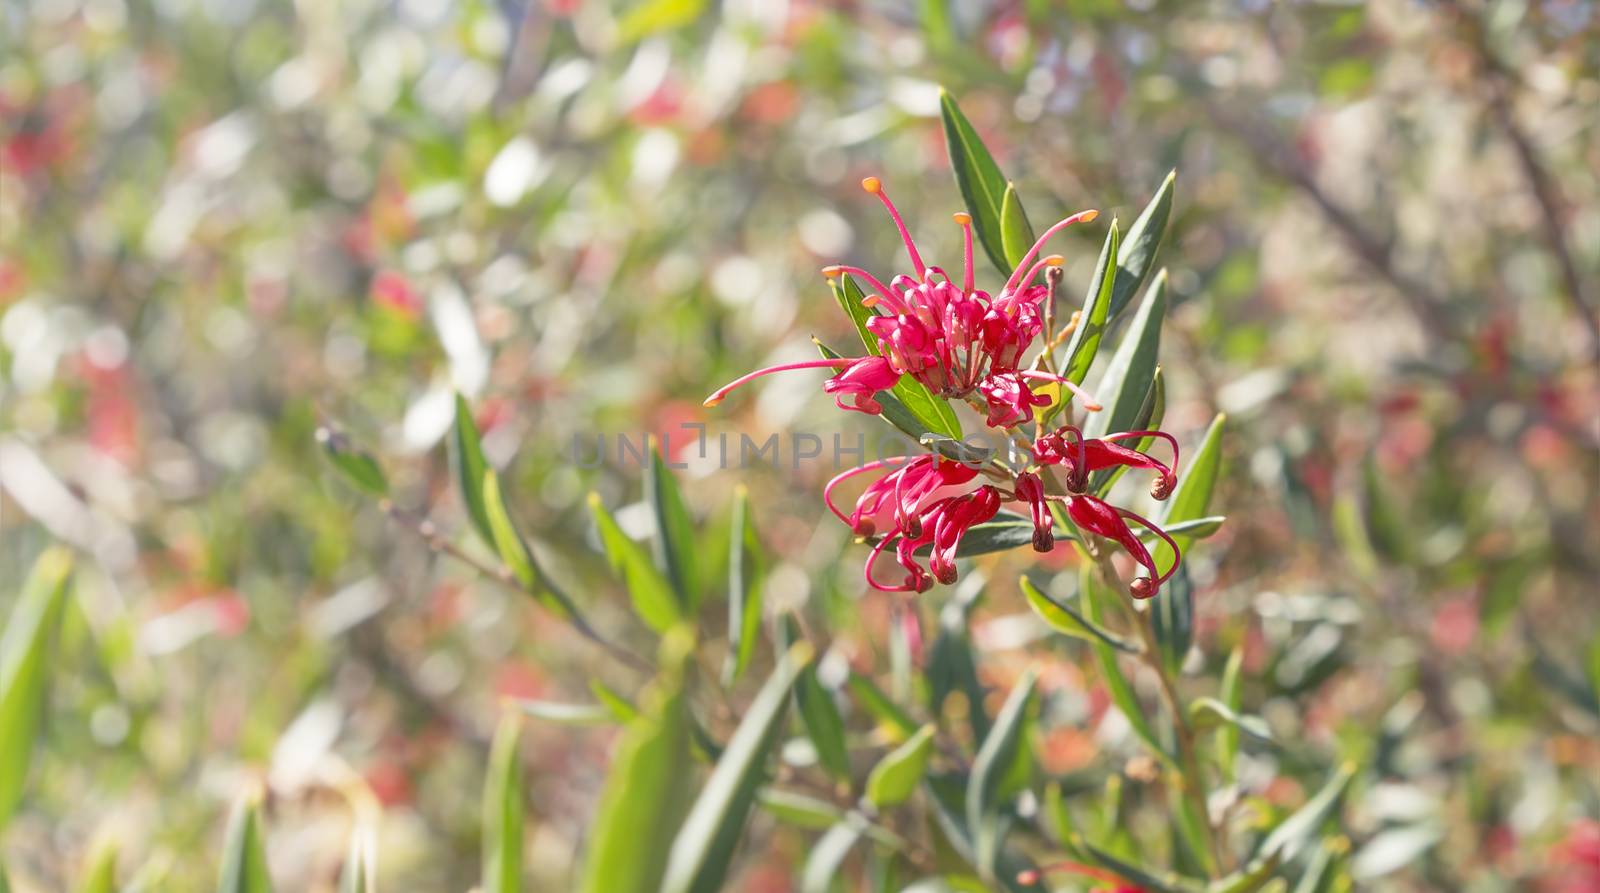 Australian wildflower Grevillea splendour, a native shrub against bokeh colorful floral background in winter